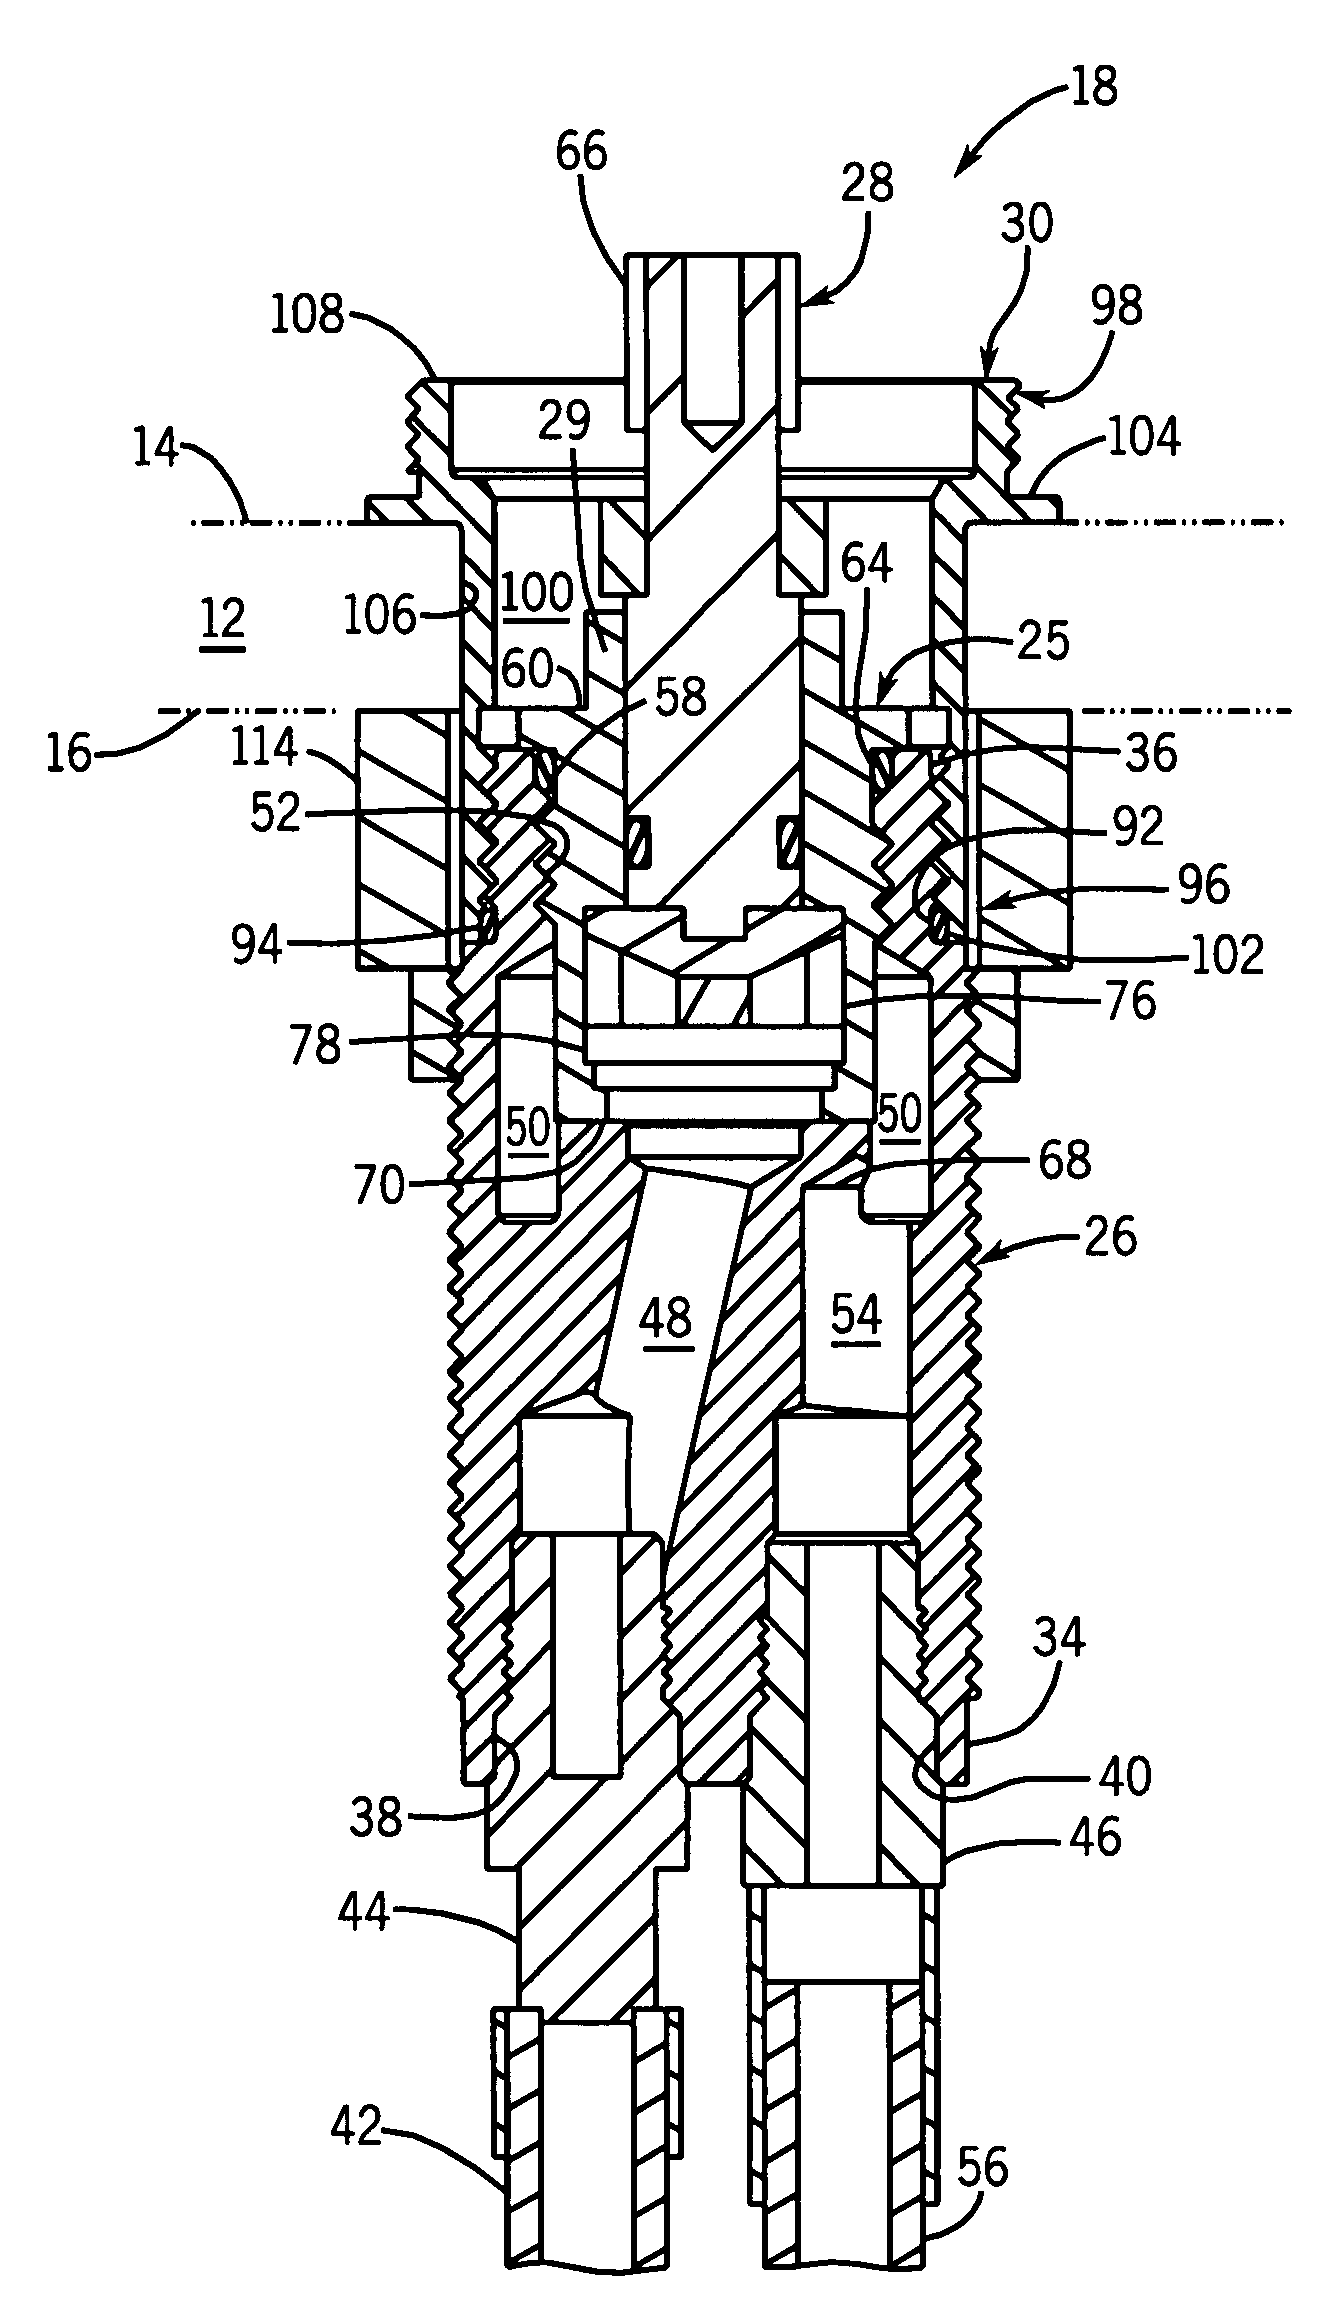 Low-profile valve assembly